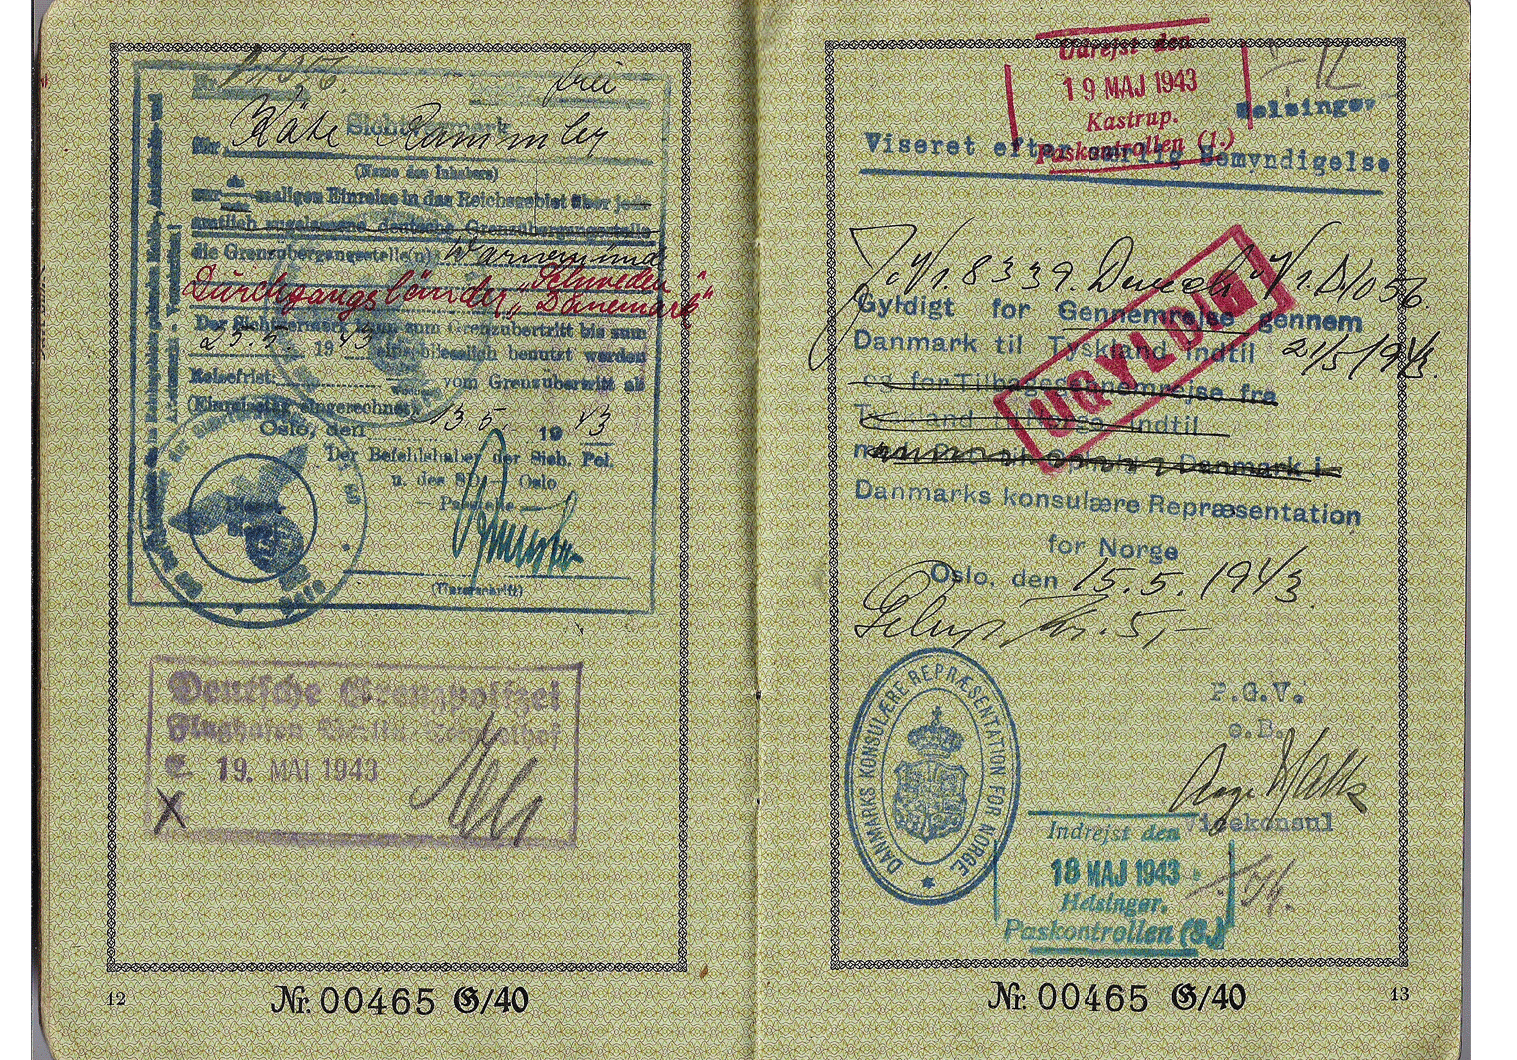 German passport used for Oslo